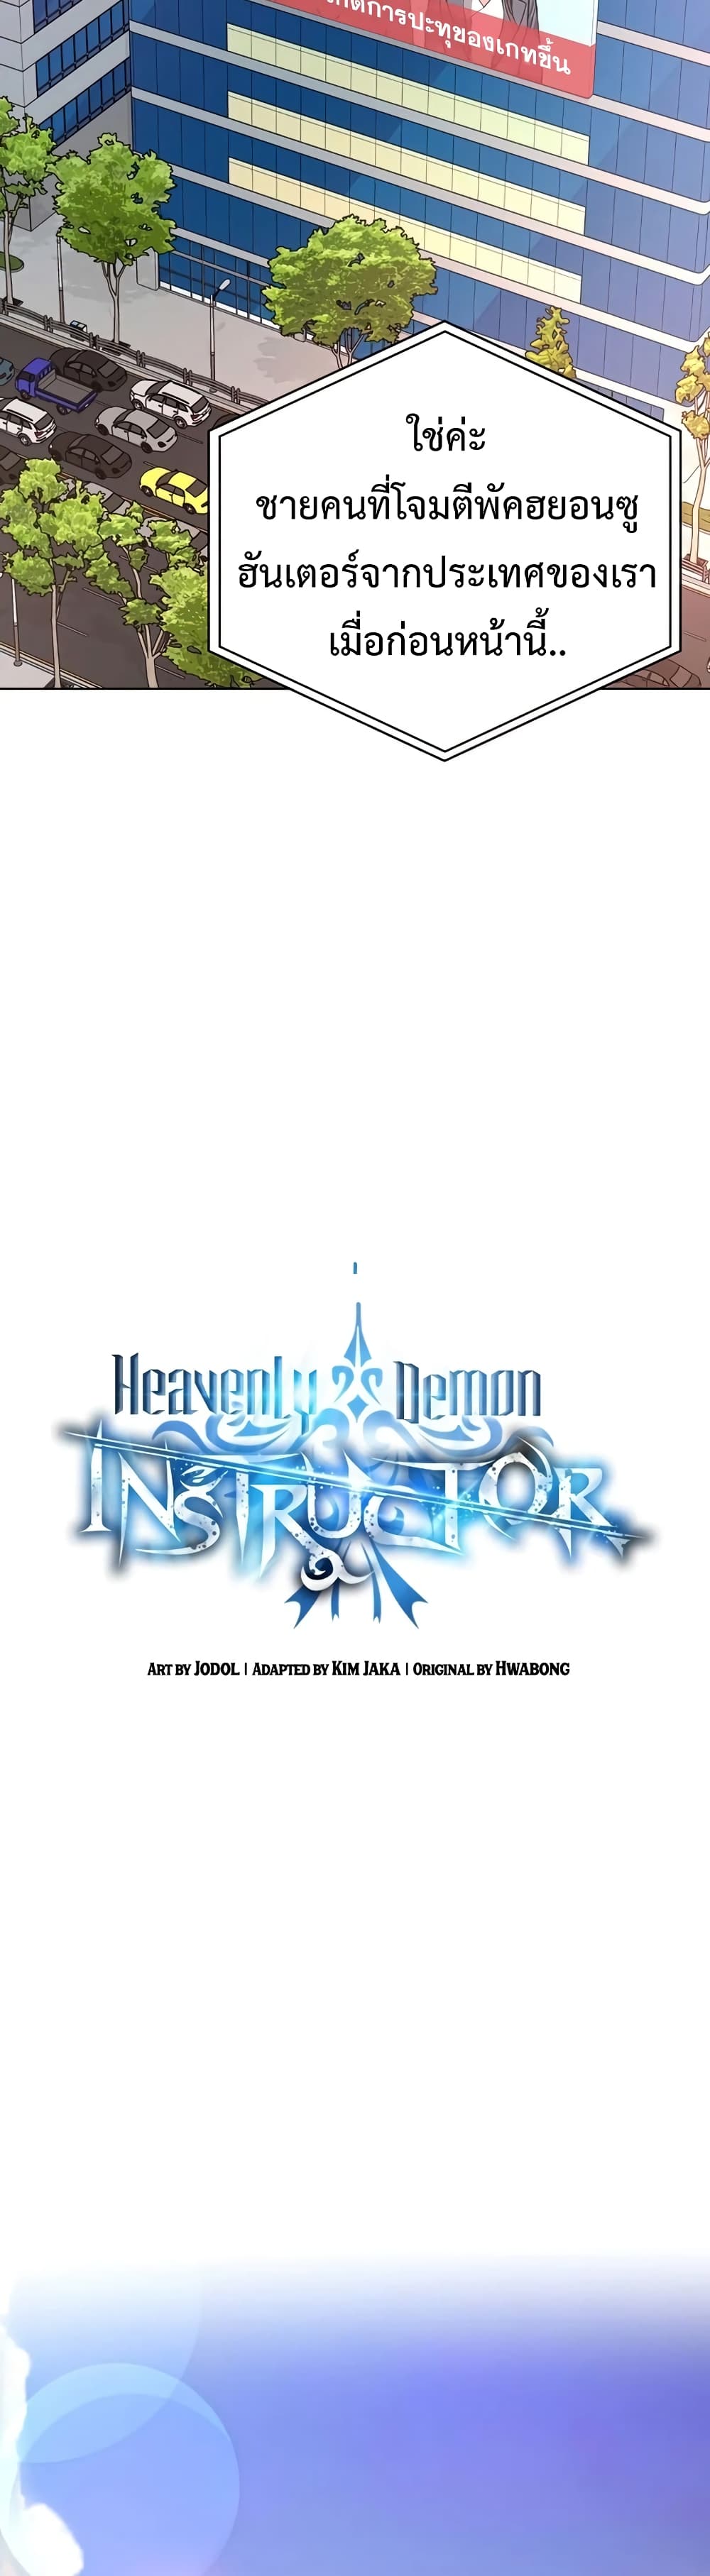 Heavenly Demon Instructor 43-43